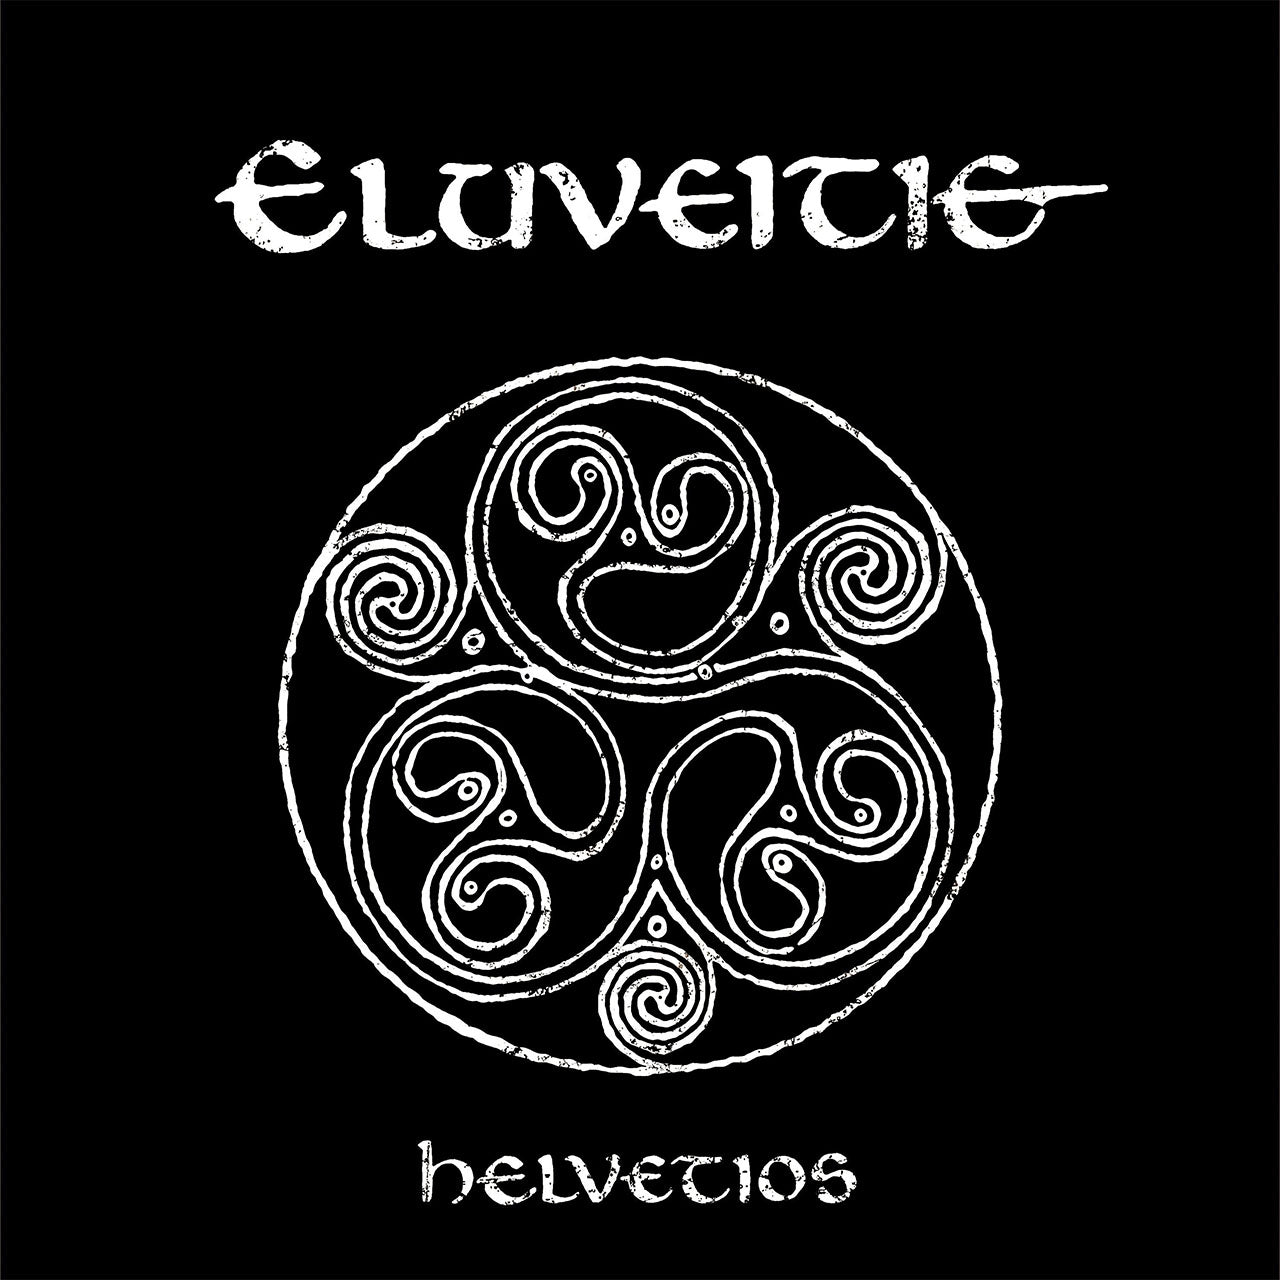 Eluveitie - Helvetios (CD)